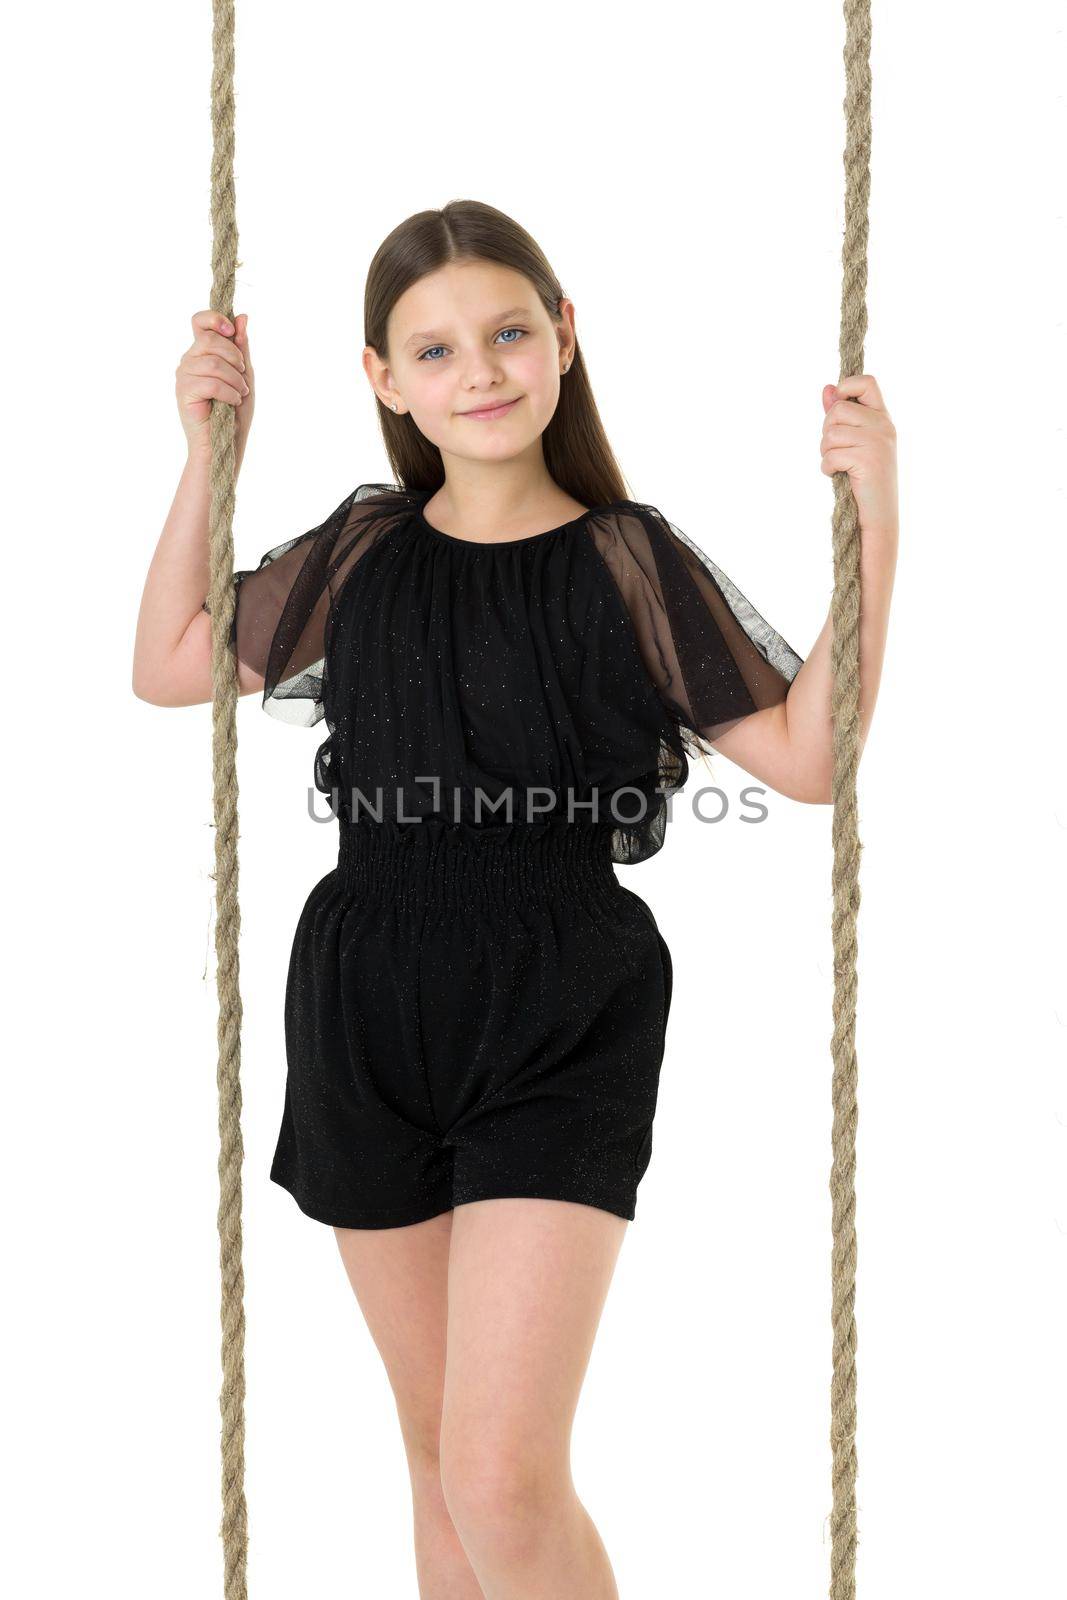 Joyful girl swinging on rope swing by kolesnikov_studio